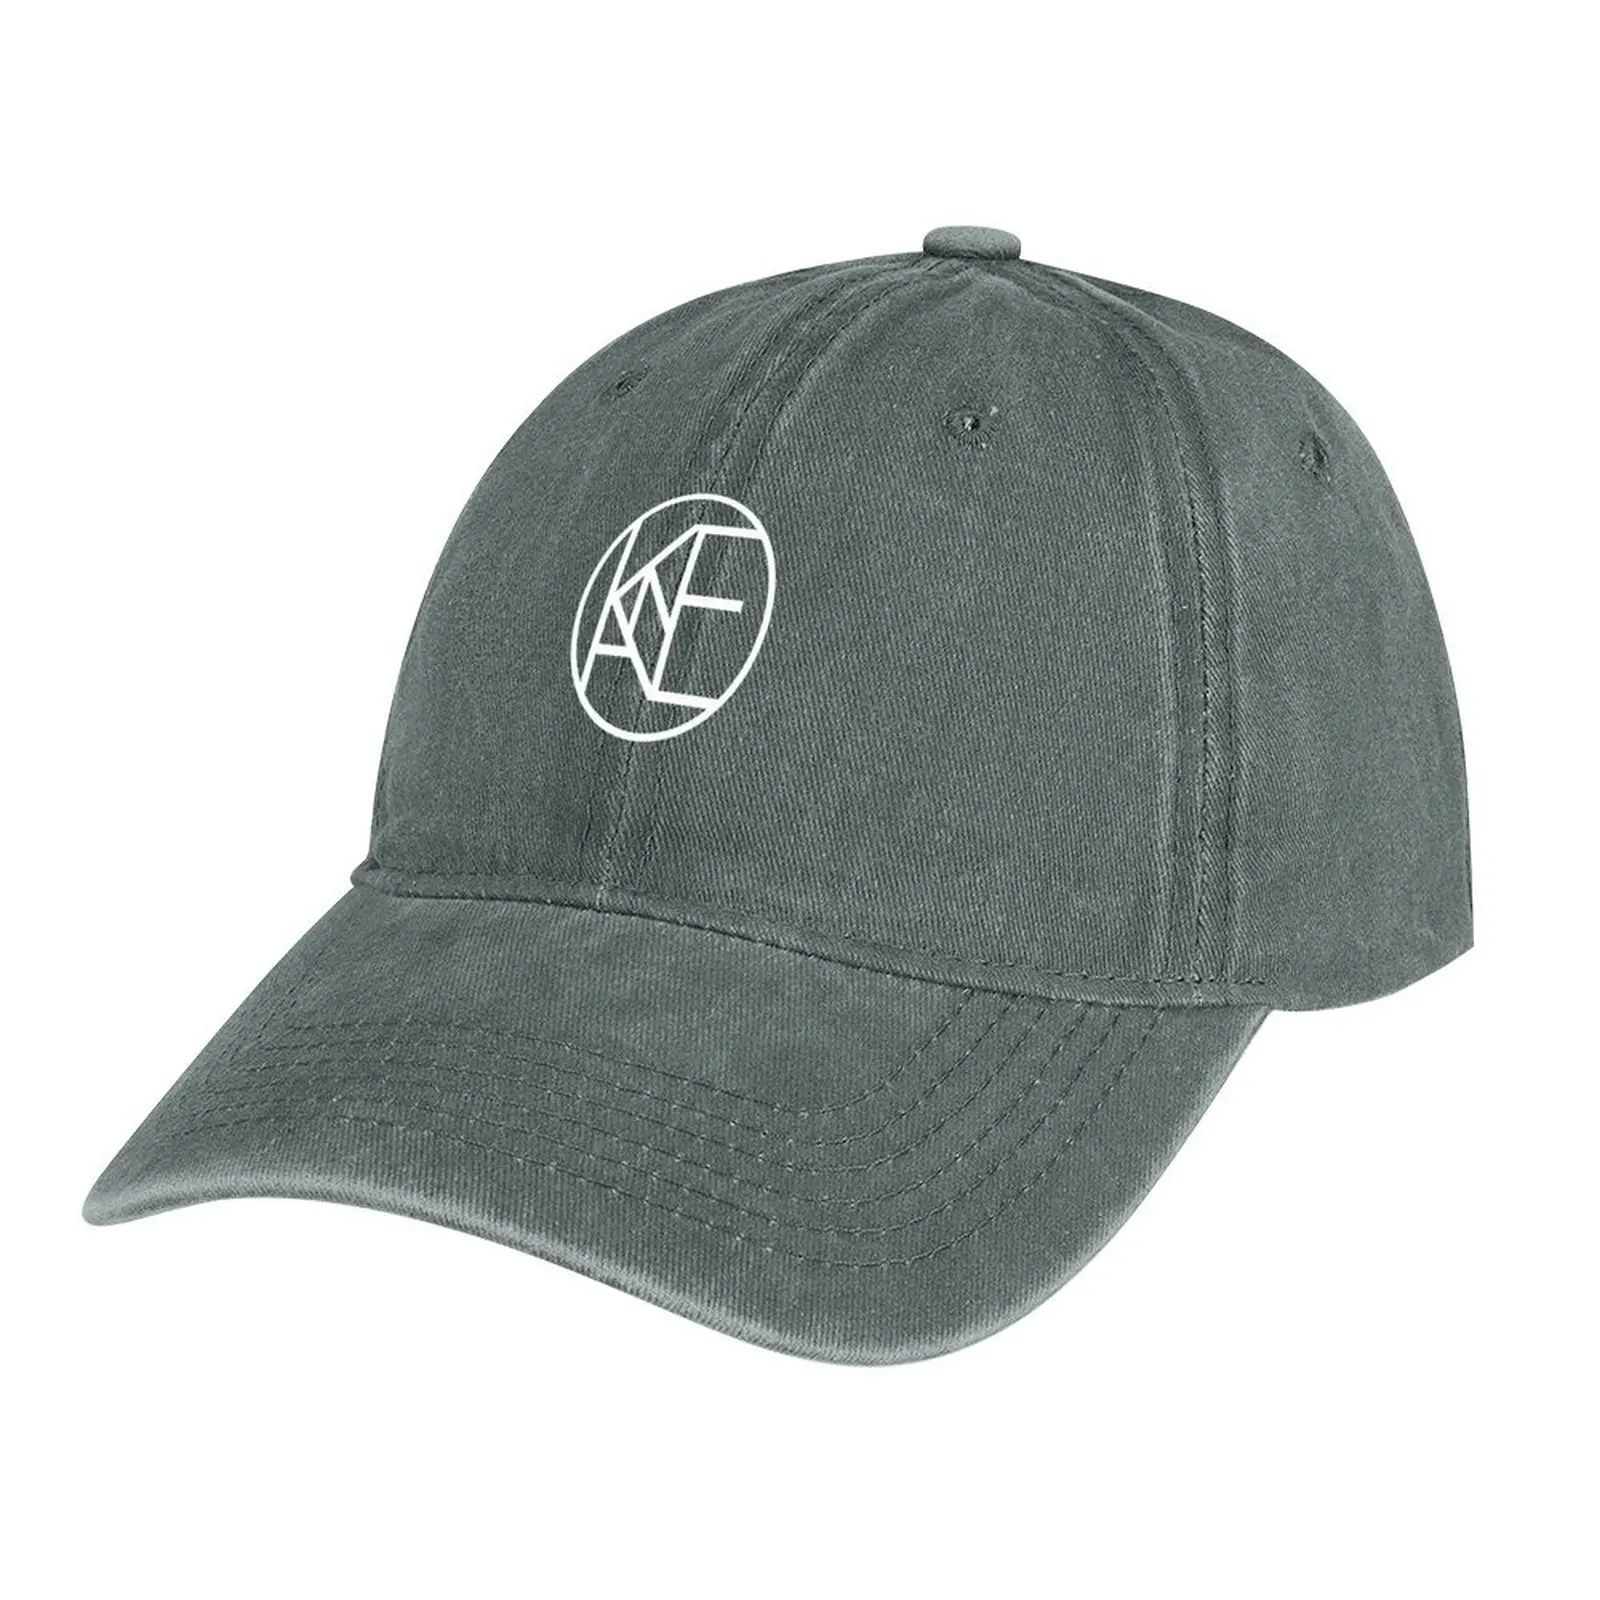 

kane brow| Perfect Gift|kane brown gift Cowboy Hat Military Tactical Cap Thermal Visor Custom Cap Men's Baseball Women's